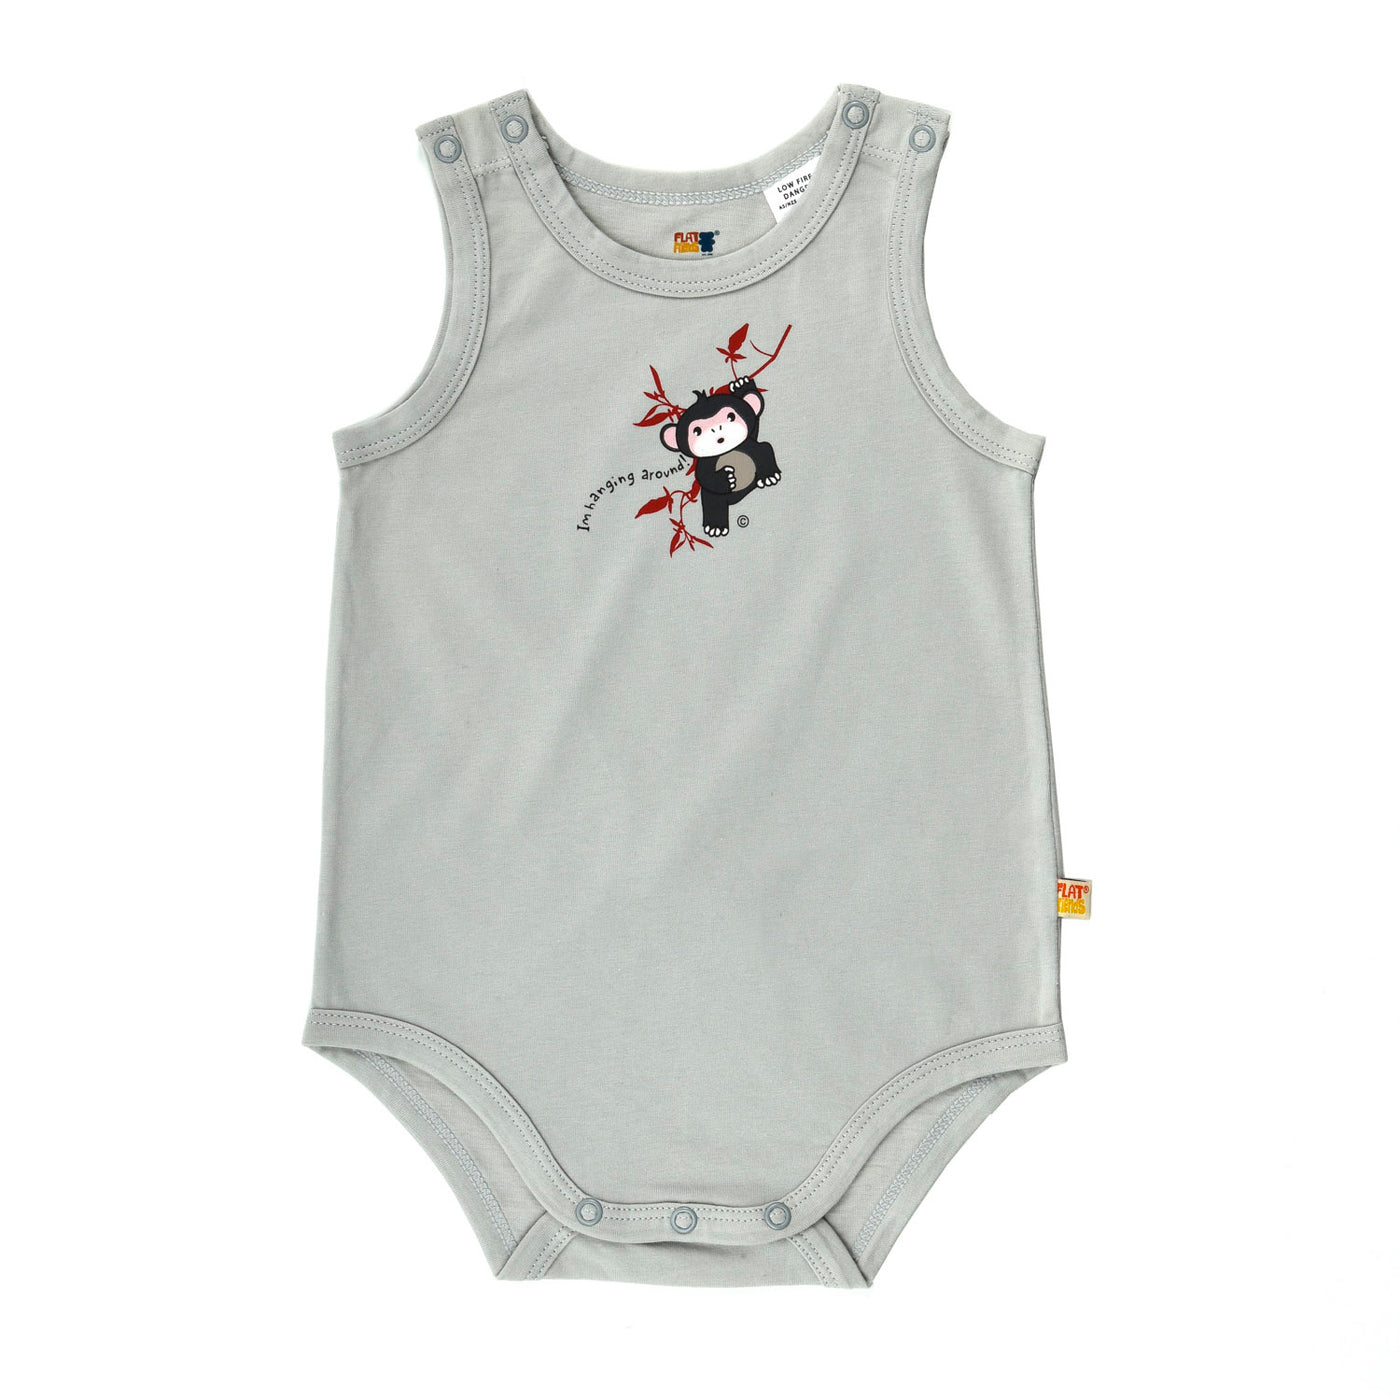 Singlet Baby Jump Suit - Organic Cotton -Chimp